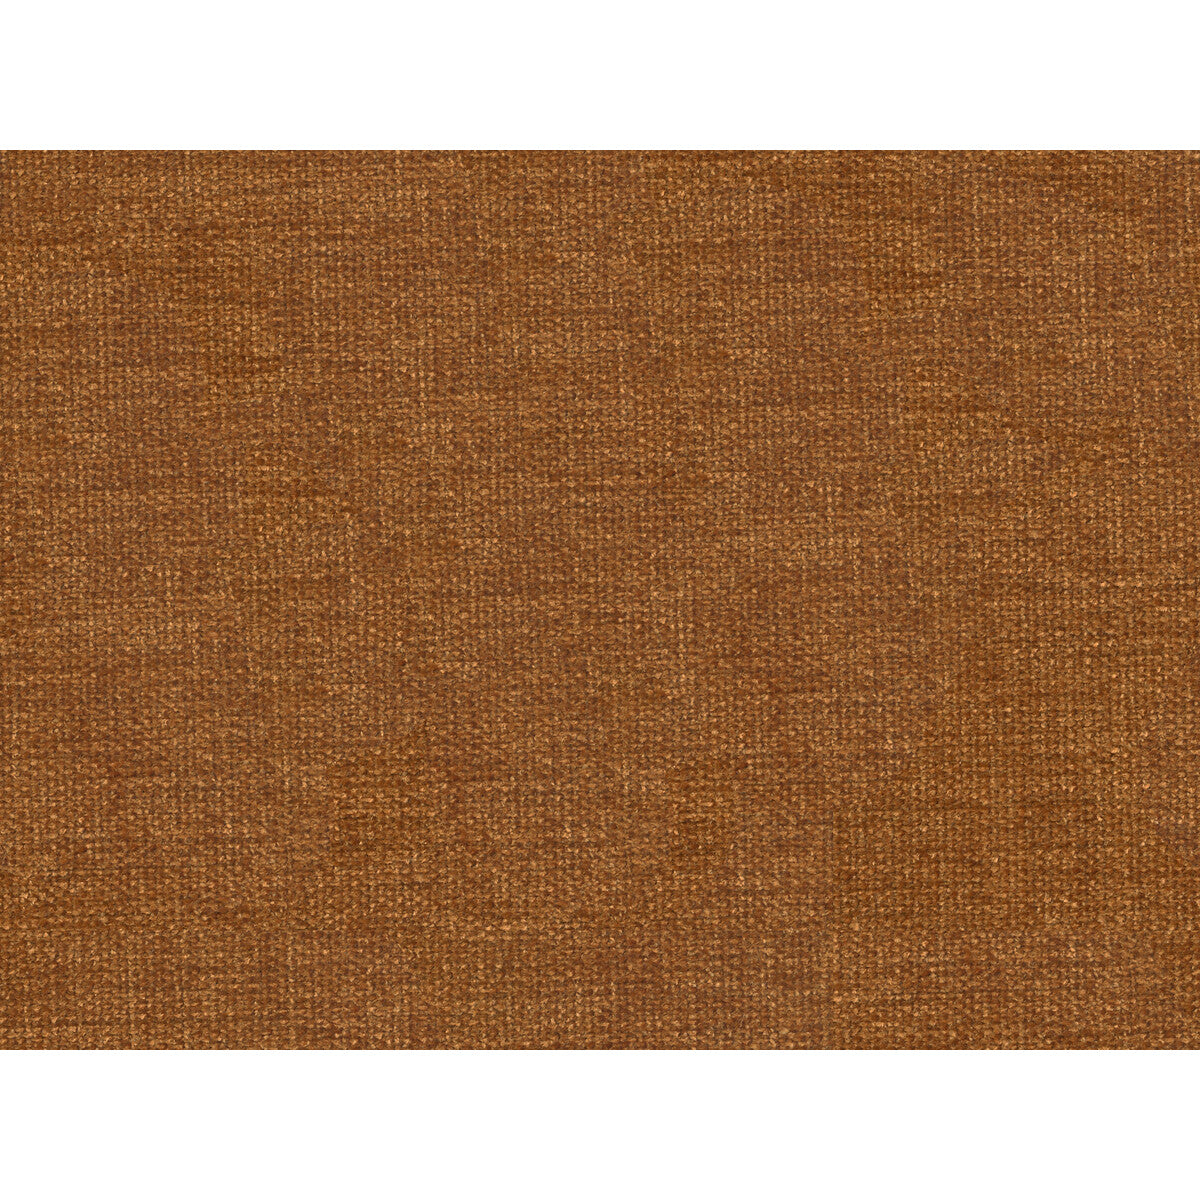 Kravet Smart fabric in 34959-124 color - pattern 34959.124.0 - by Kravet Smart in the Performance Kravetarmor collection